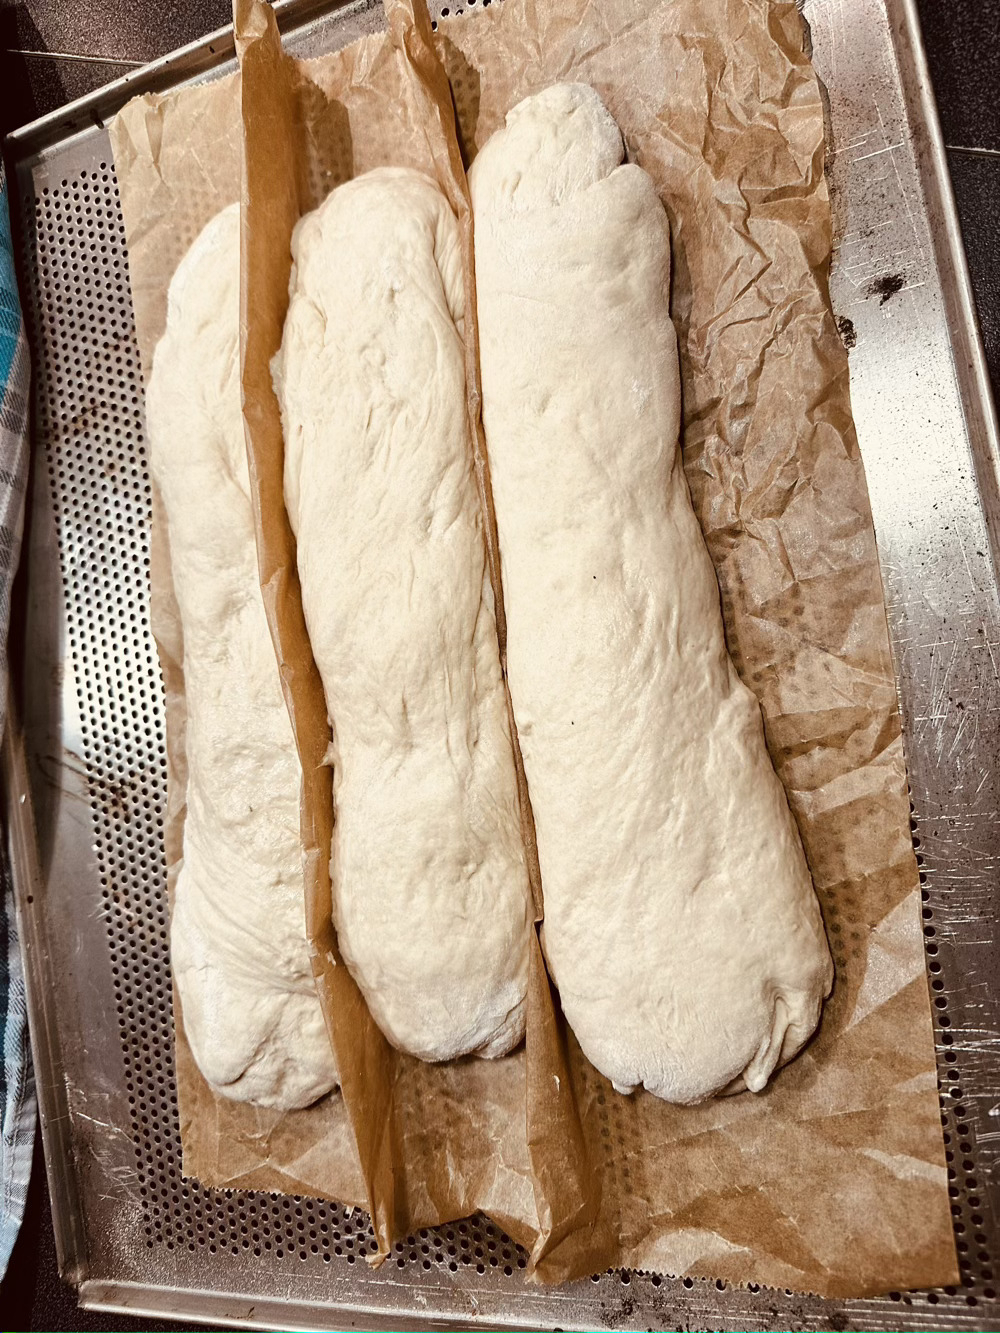 shaped baguette resting on baking parchment 